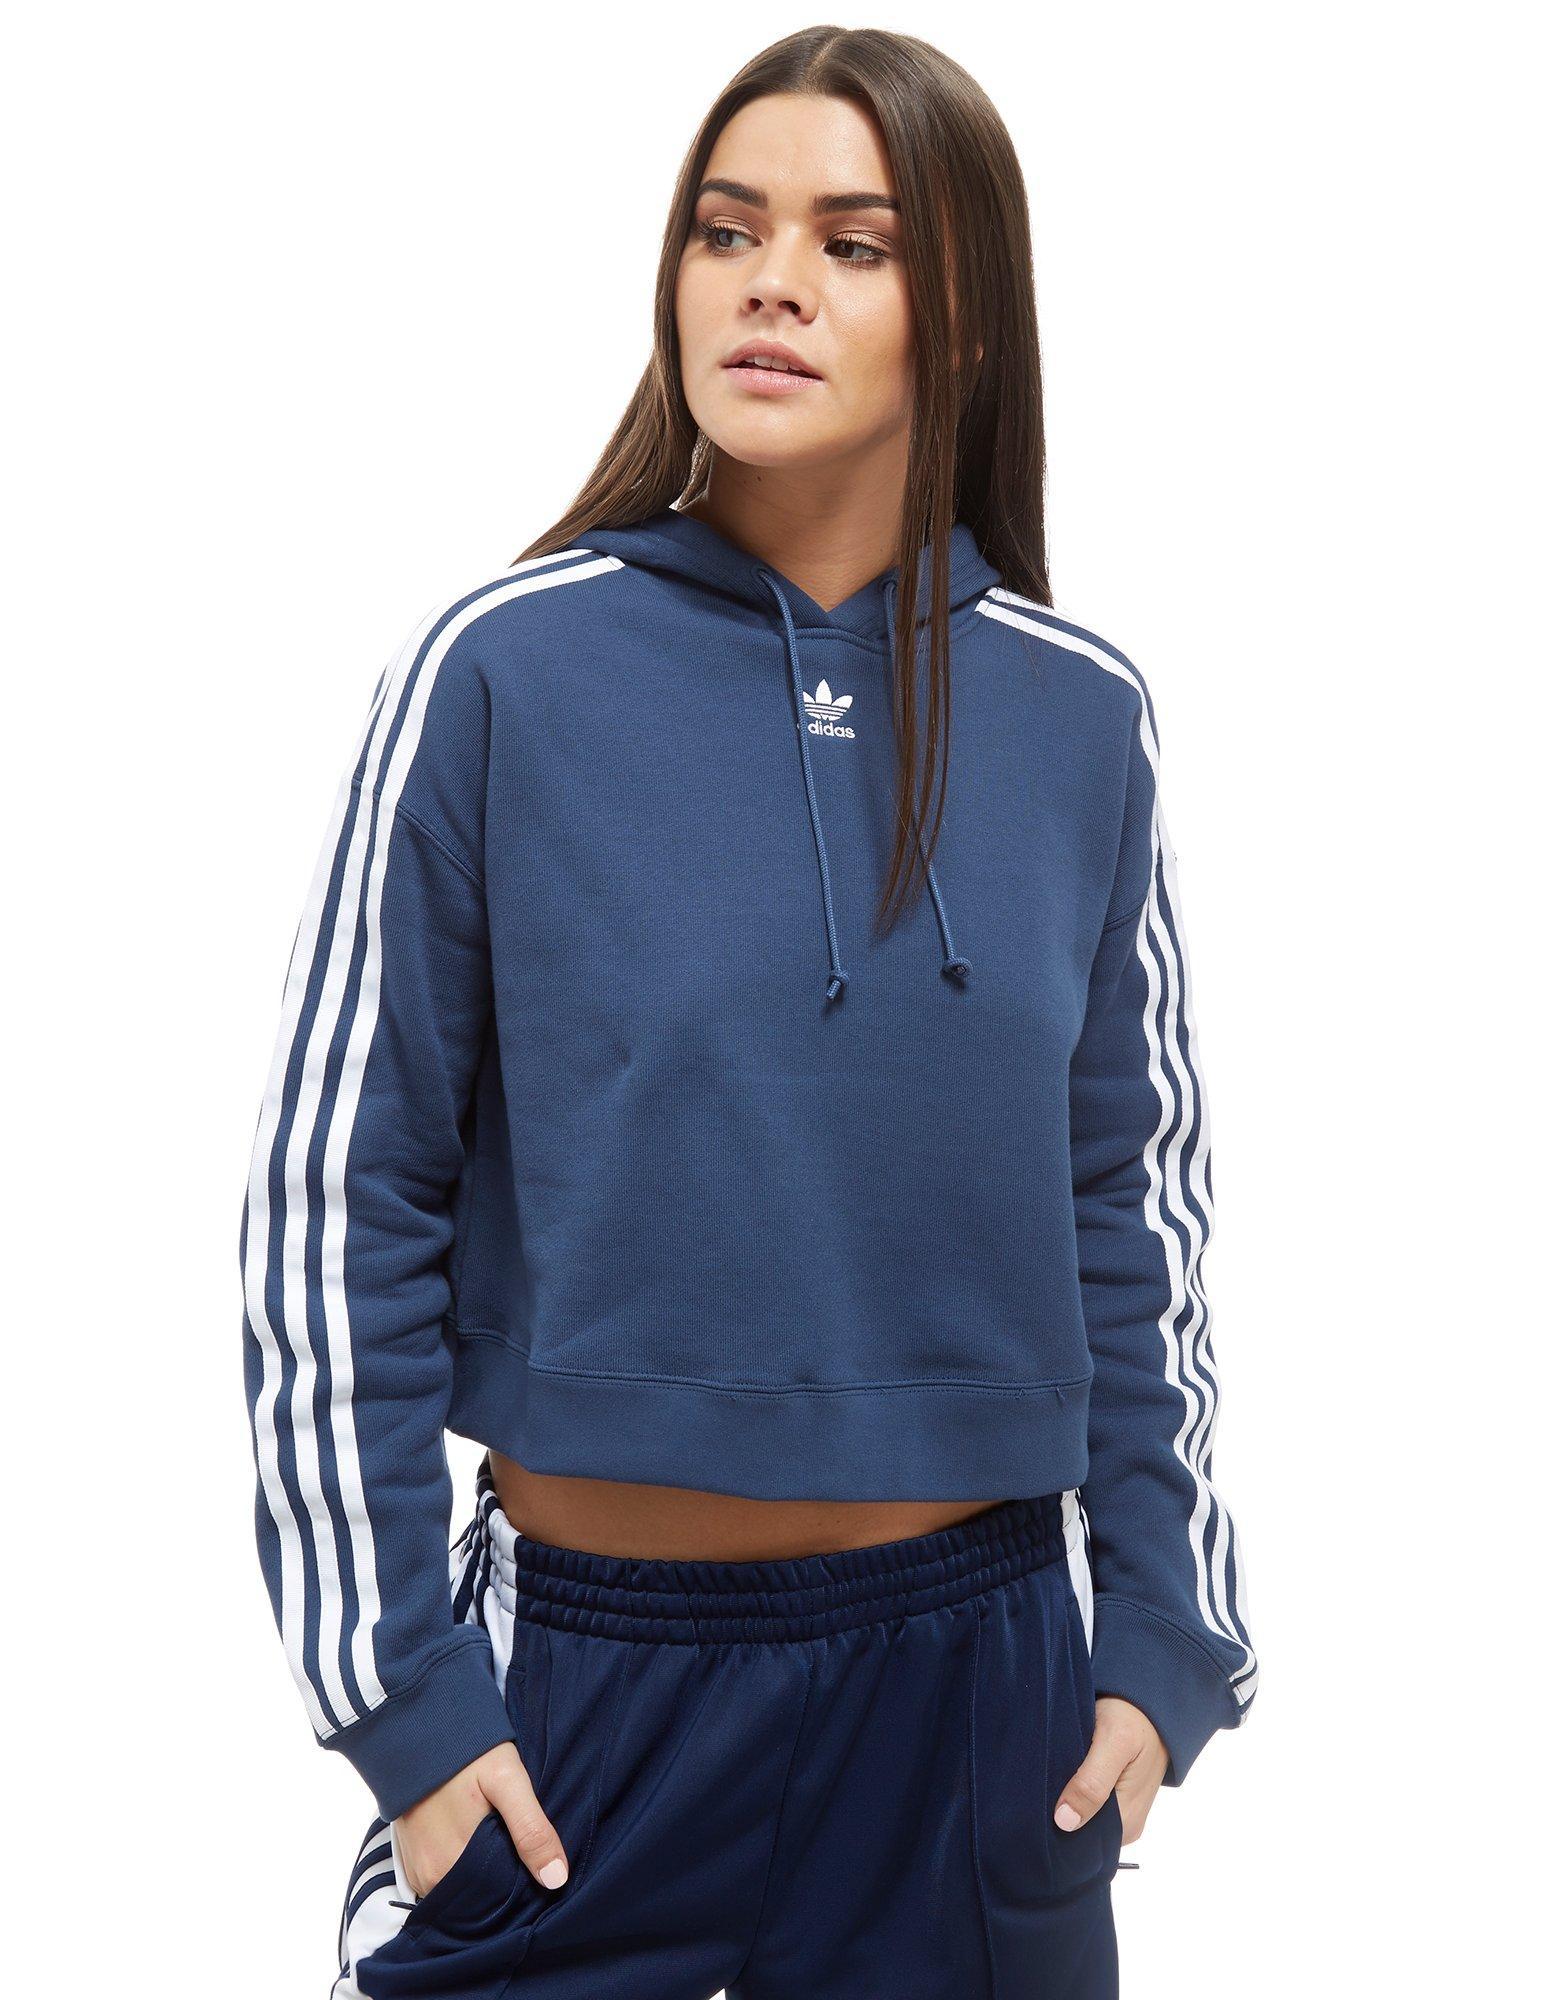 Lyst - Adidas Originals Cropped California Hoodie in Blue